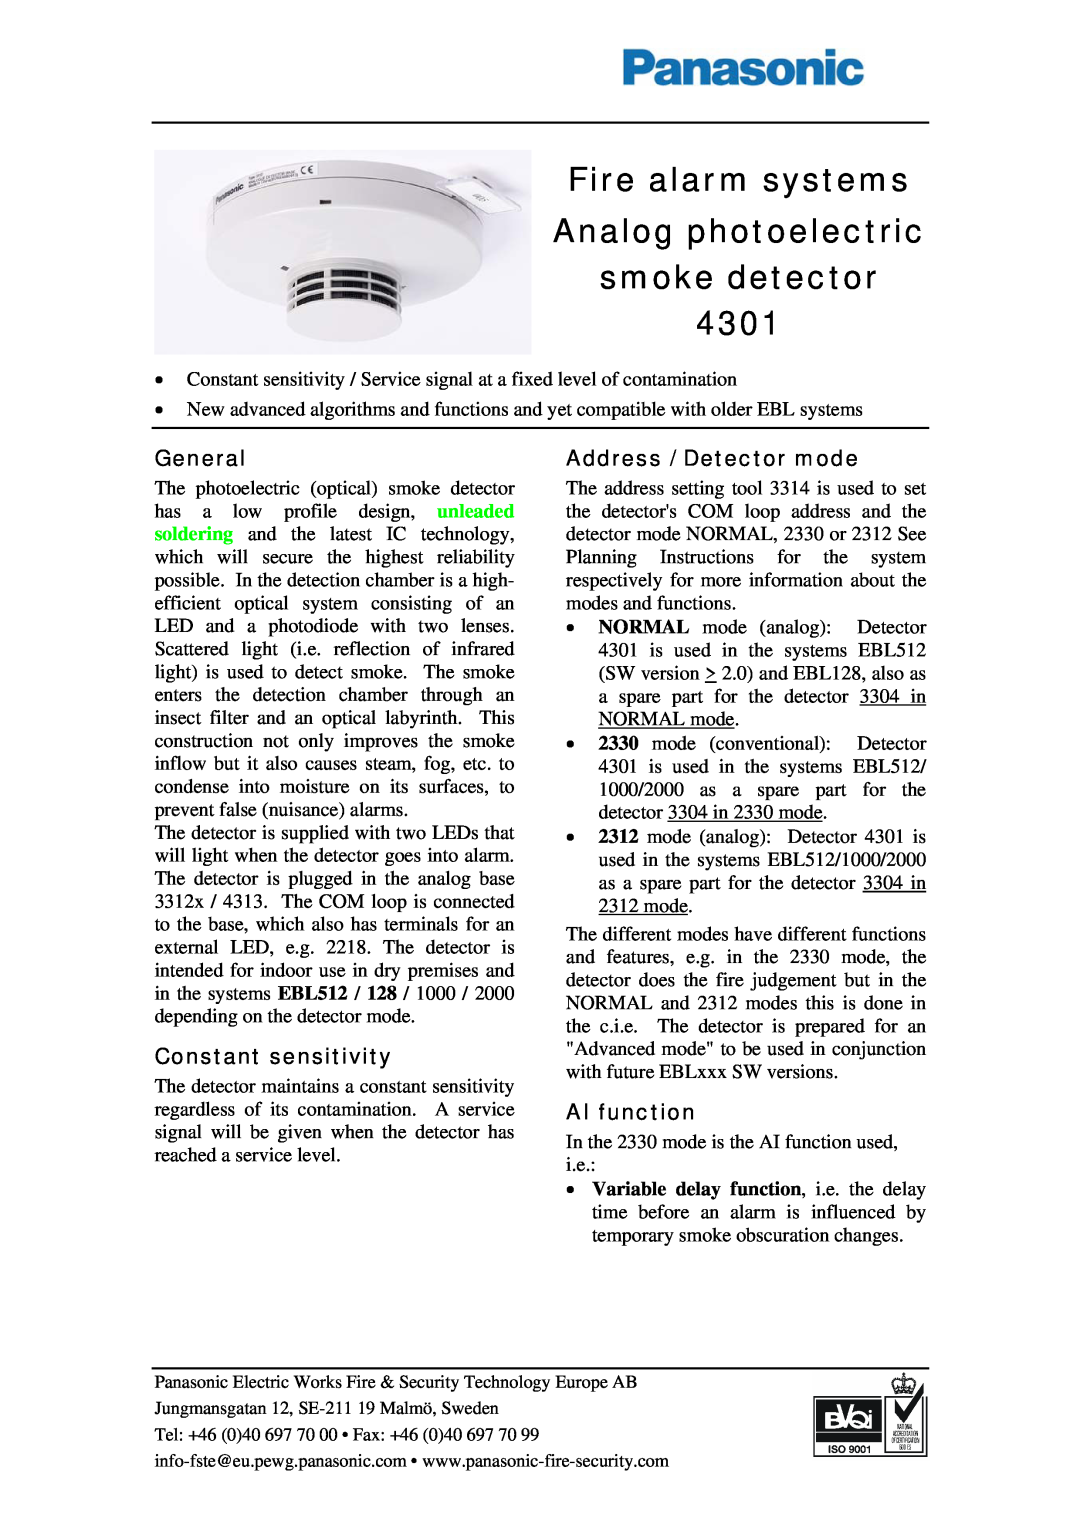 Panasonic 4301 manual Fire alarm systems Analog photoelectric smoke detector, General, Constant sensitivity, AI function 